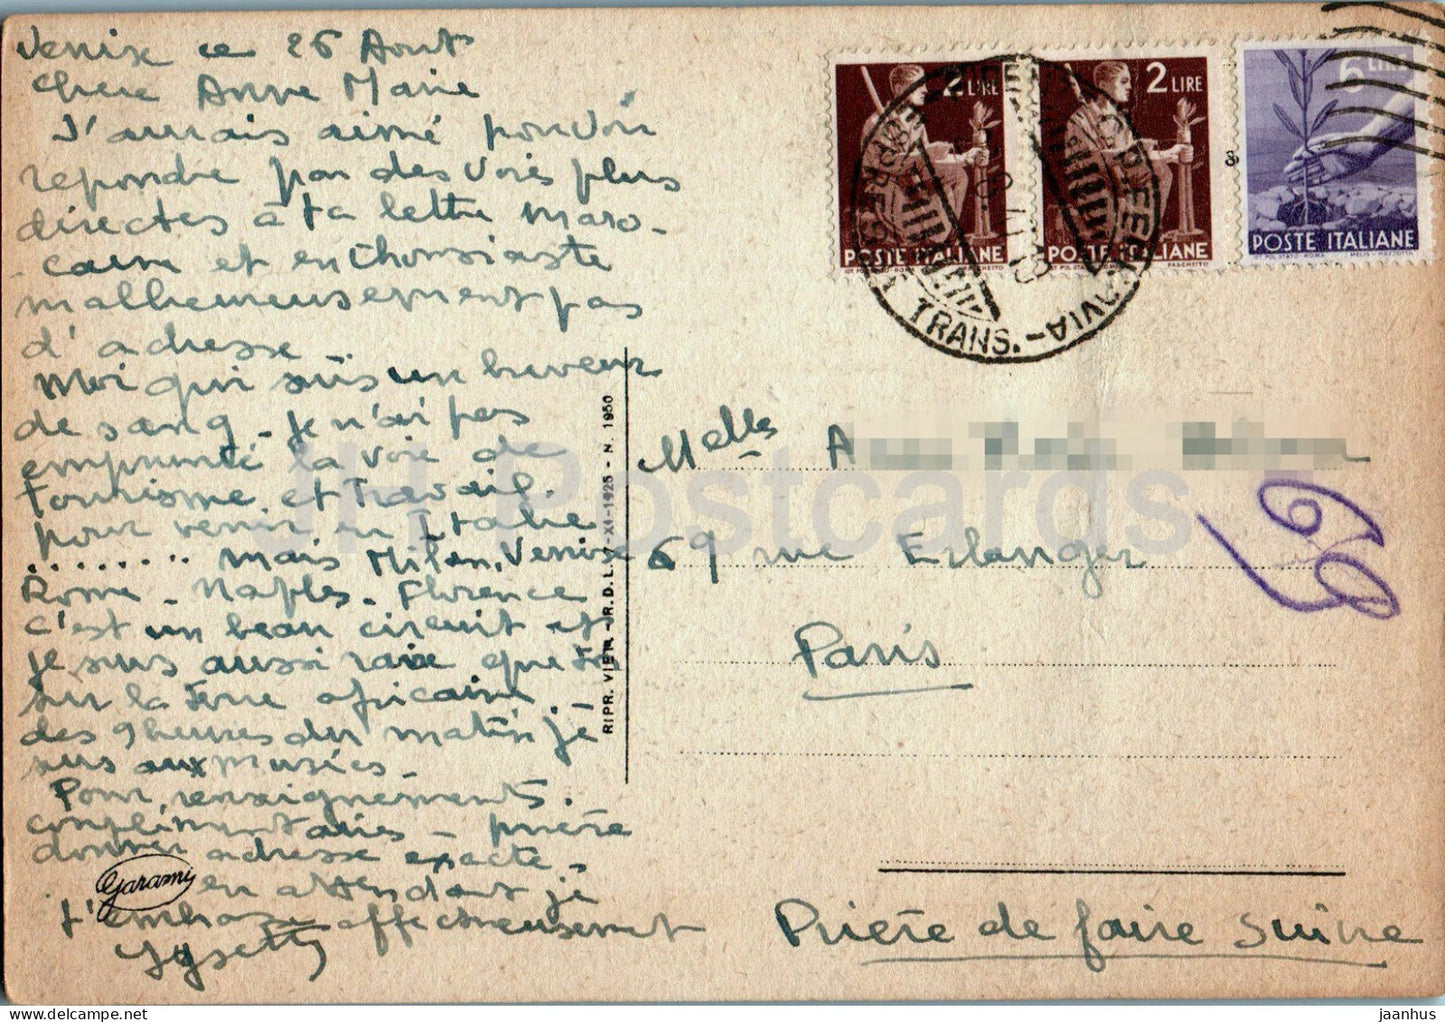 Milan - Milan - Teatro alla Scala - théâtre - Interno - carte postale ancienne - années 1940 - Italie - utilisé